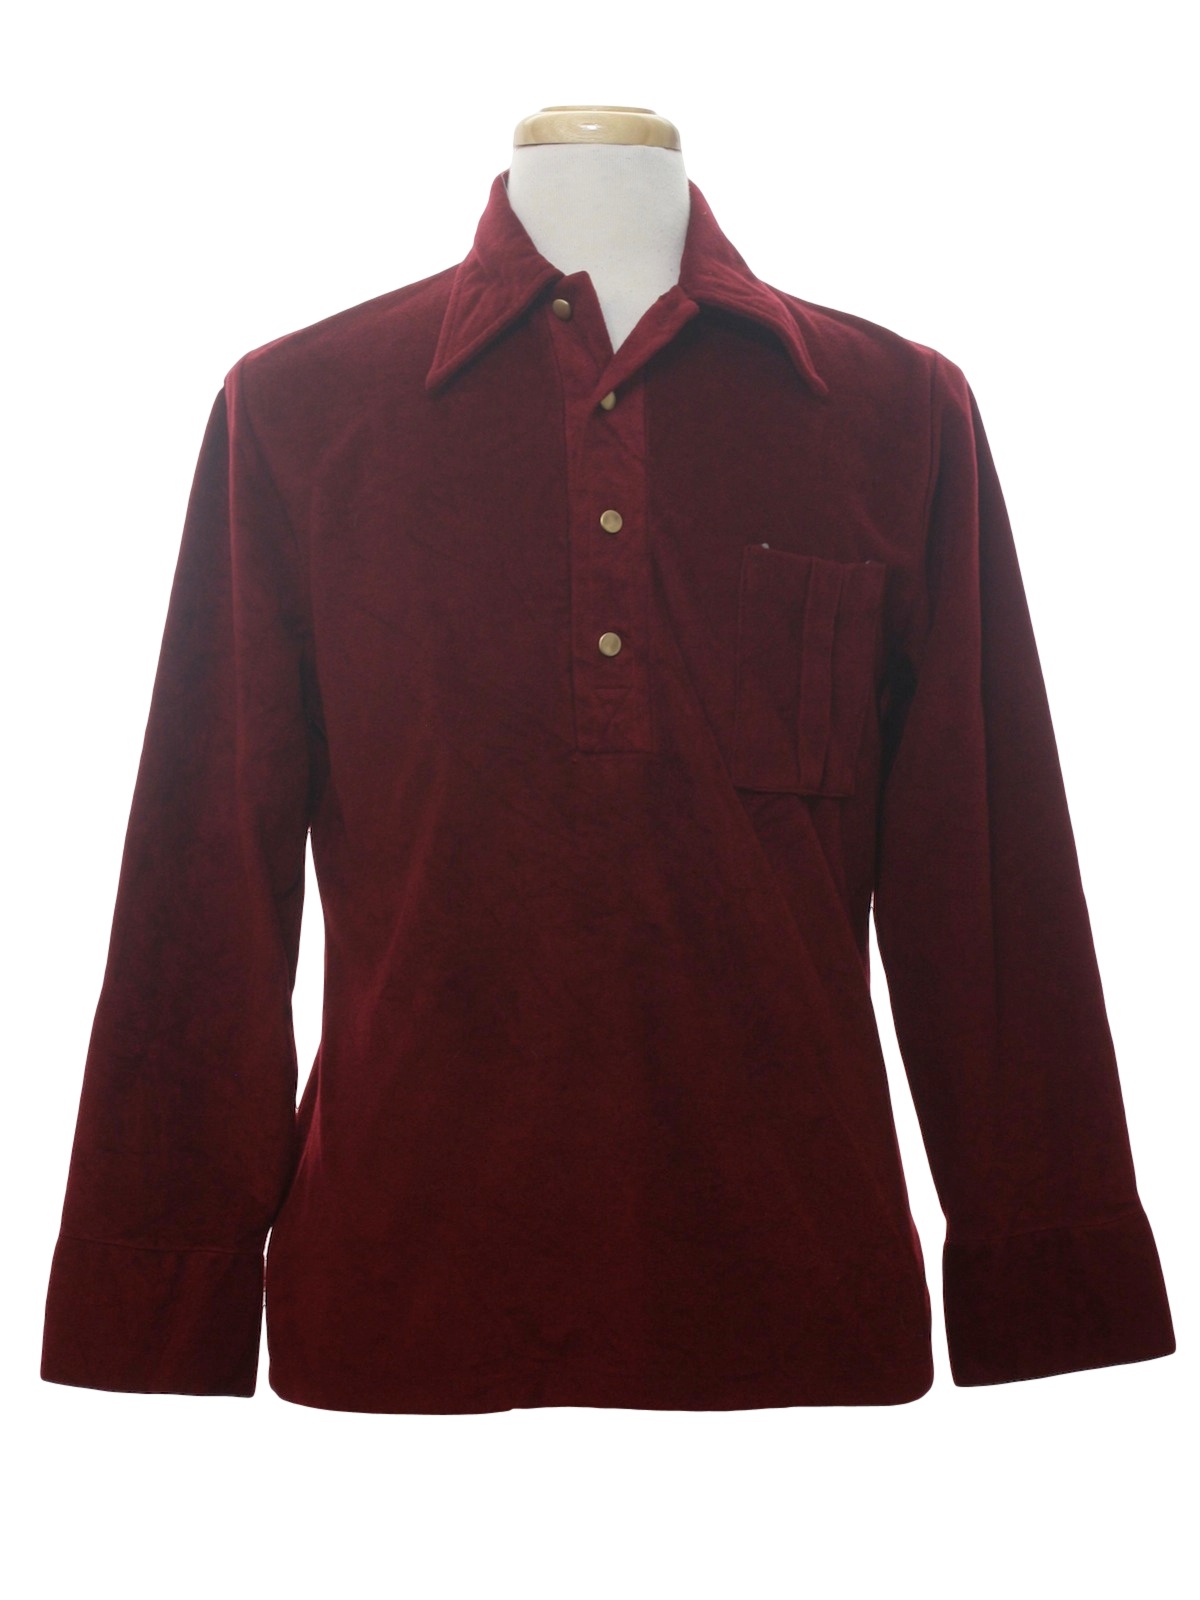 Vintage Robert Bruce 70's Velour Shirt: 70s -Robert Bruce- Mens wine ...